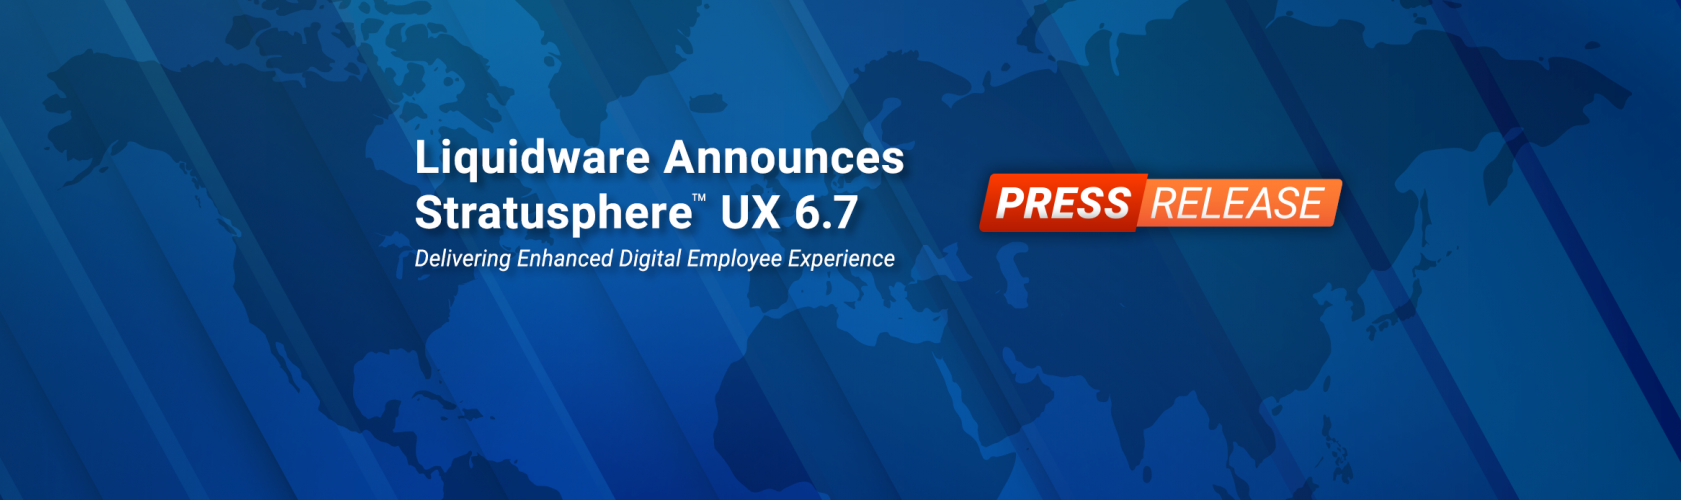 Liquidware Announces Stratusphere UX 6.7 — Delivering Enhanced Digital Employee Experience